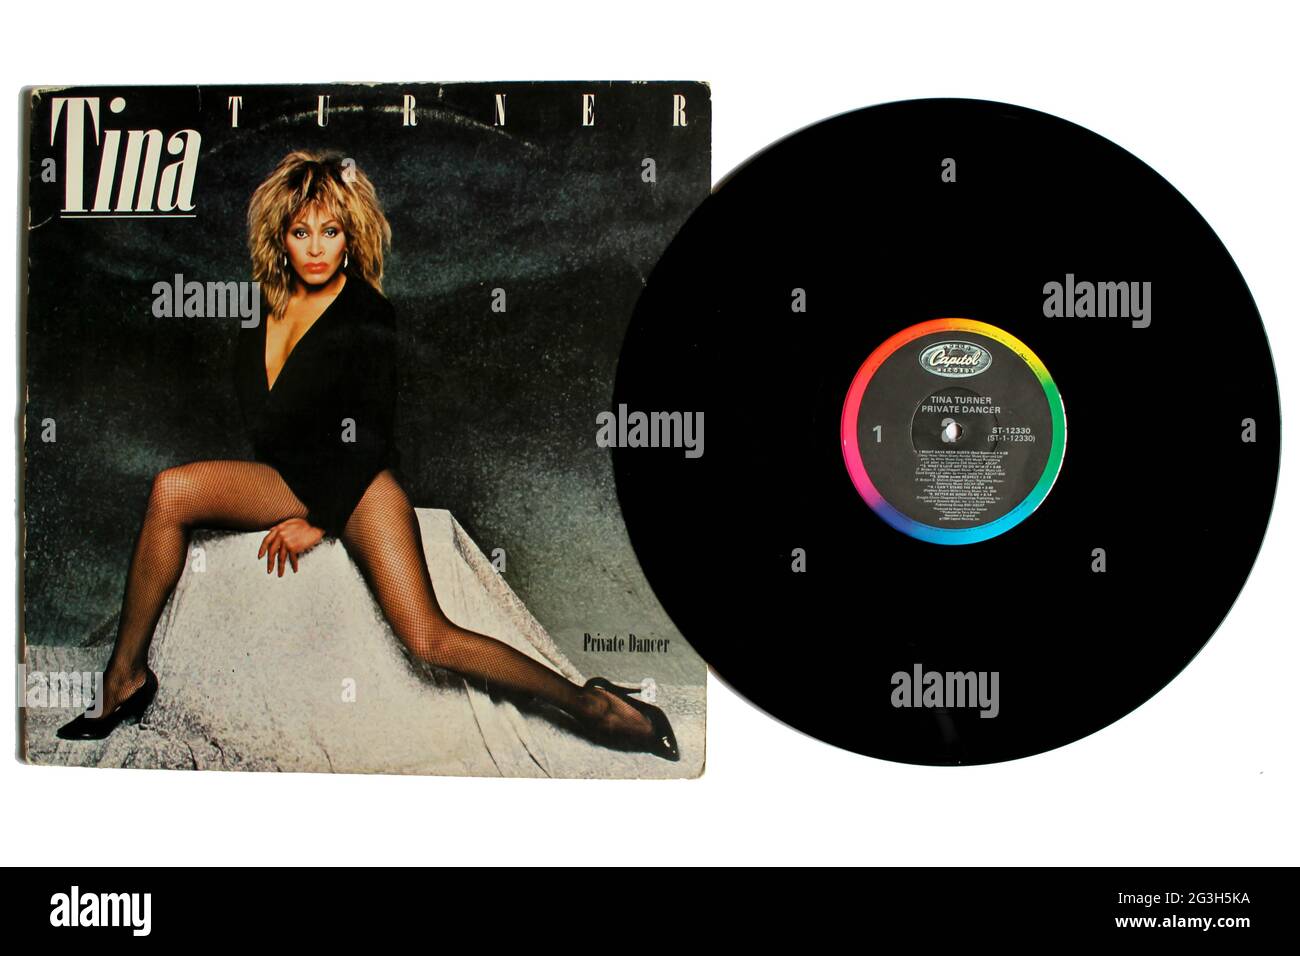 Pop, rock and RnB artist, Tina Turner music album on vinyl record LP disc.  Titled: Private Dancer album cover Stock Photo - Alamy